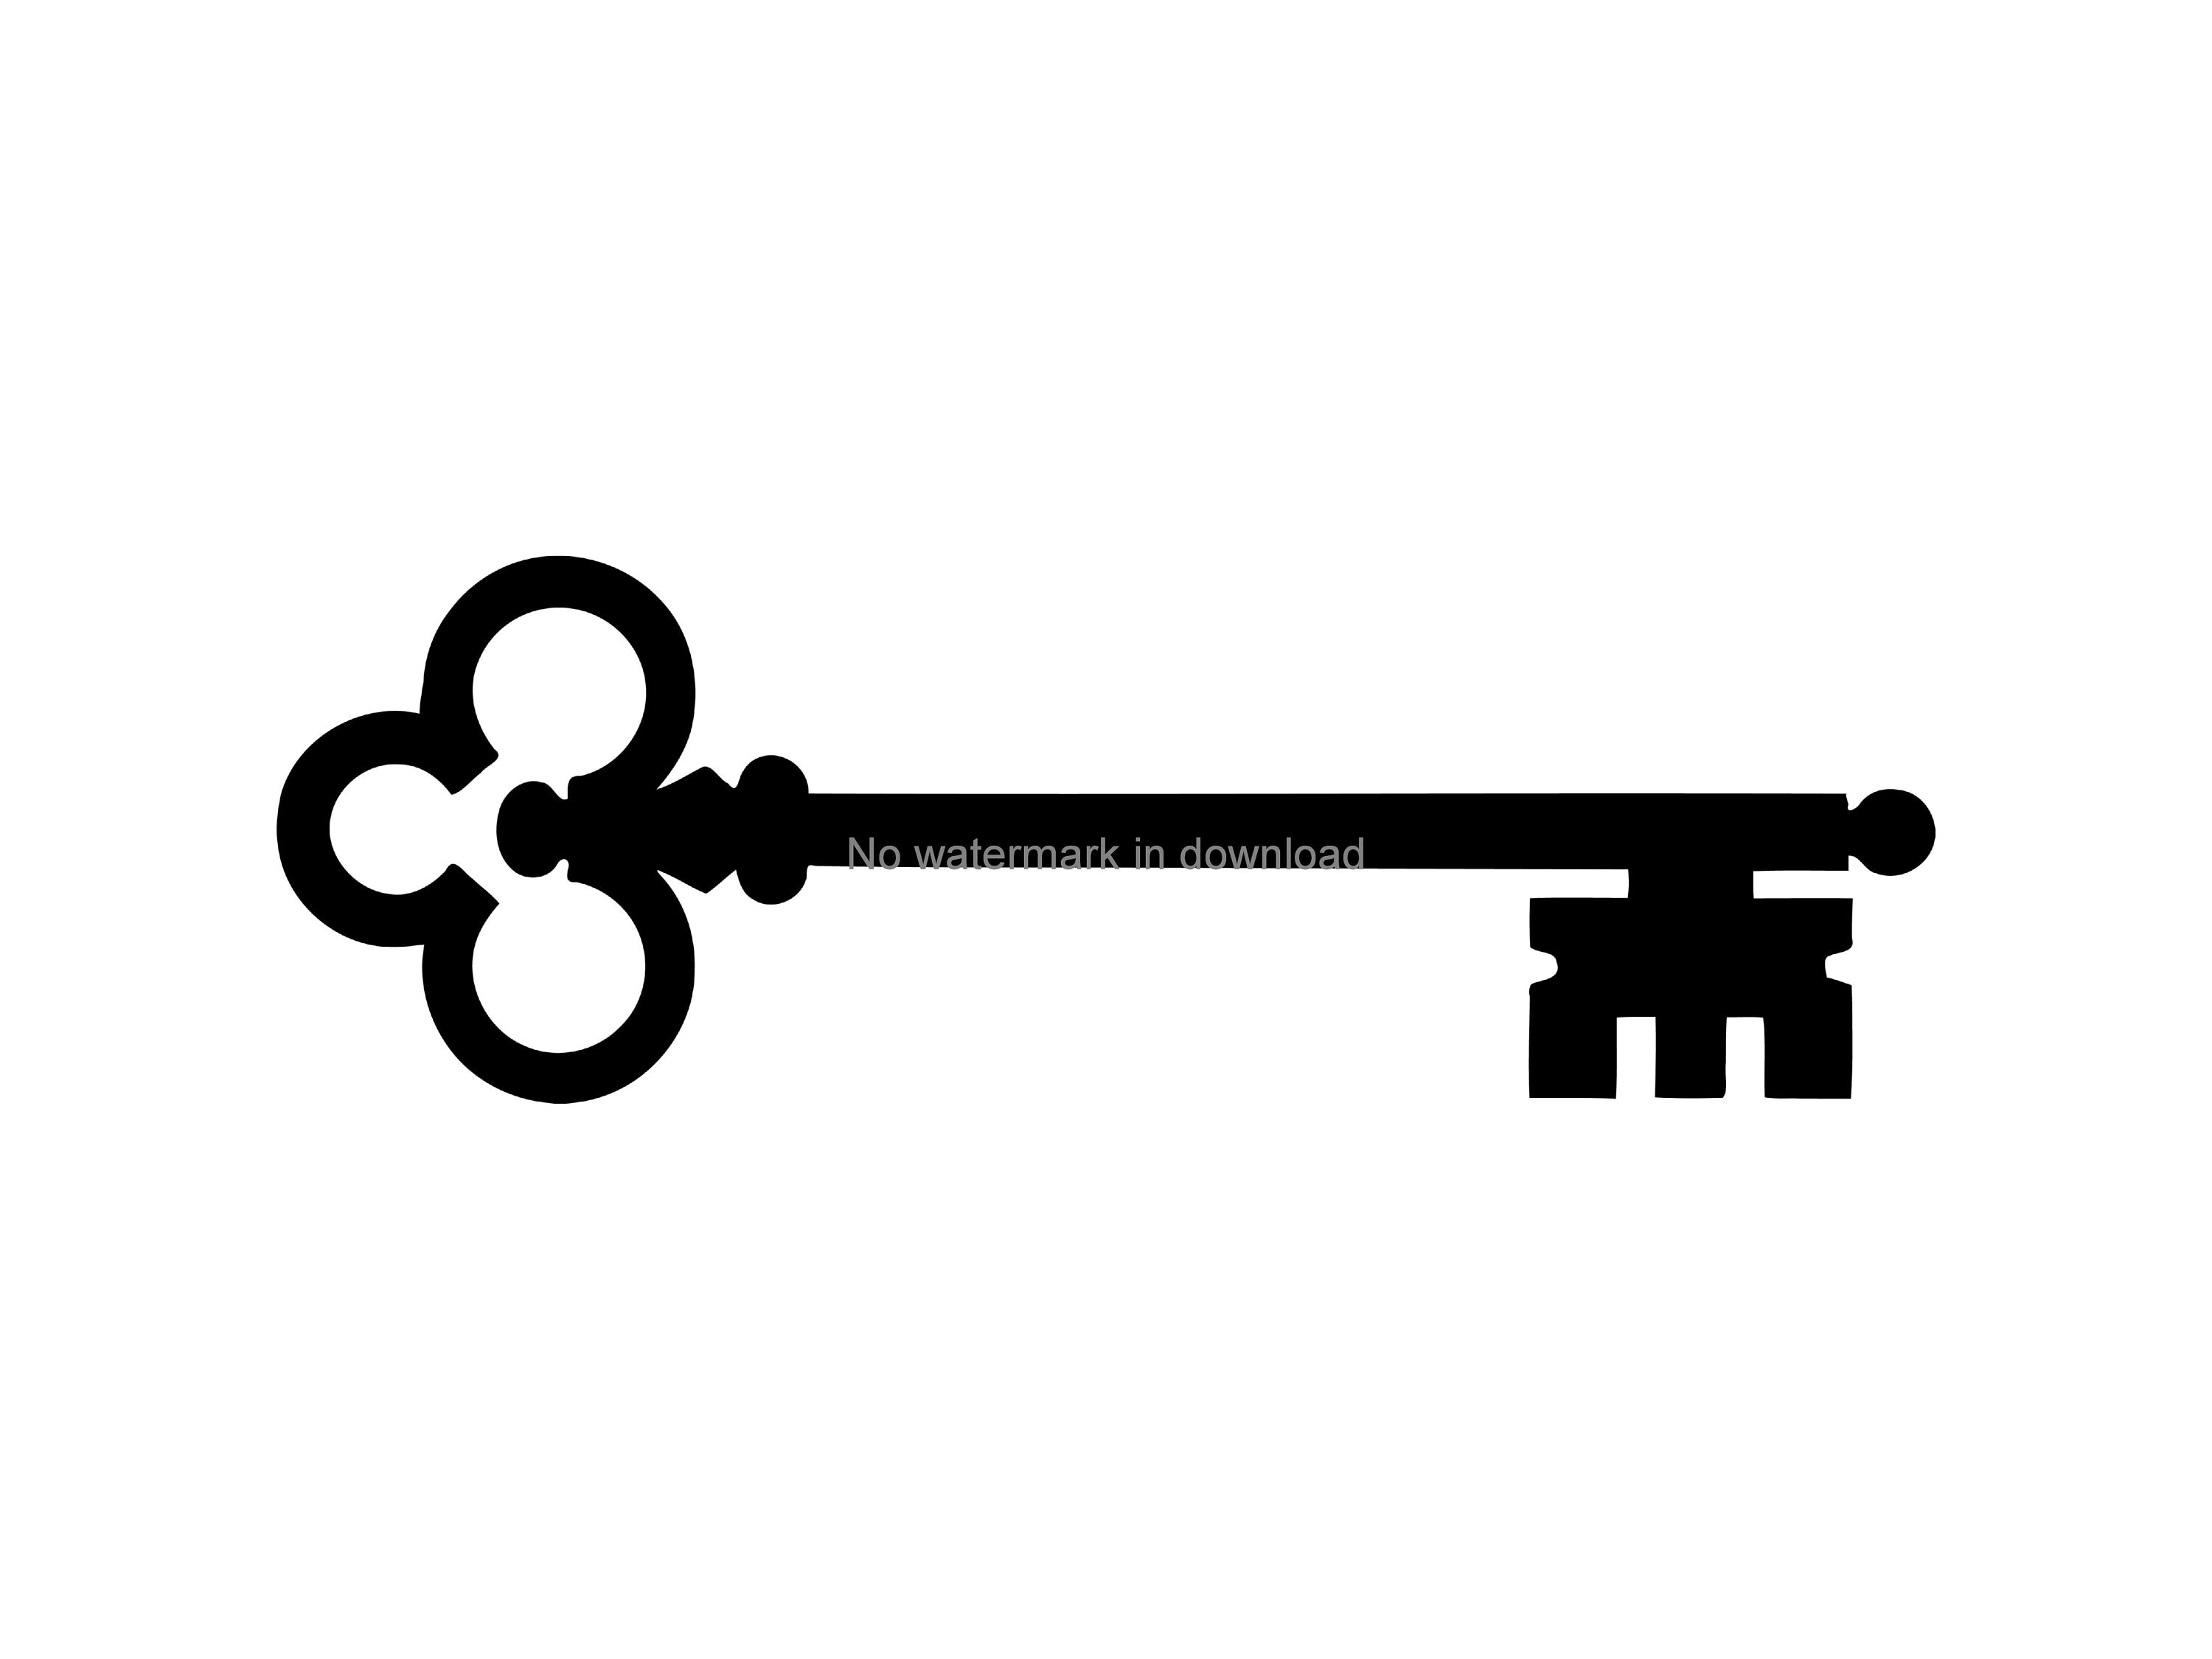 Key черный. Изображение ключа. Ключ черно белый. Старинный ключ силуэт. Ключ векторное изображение.